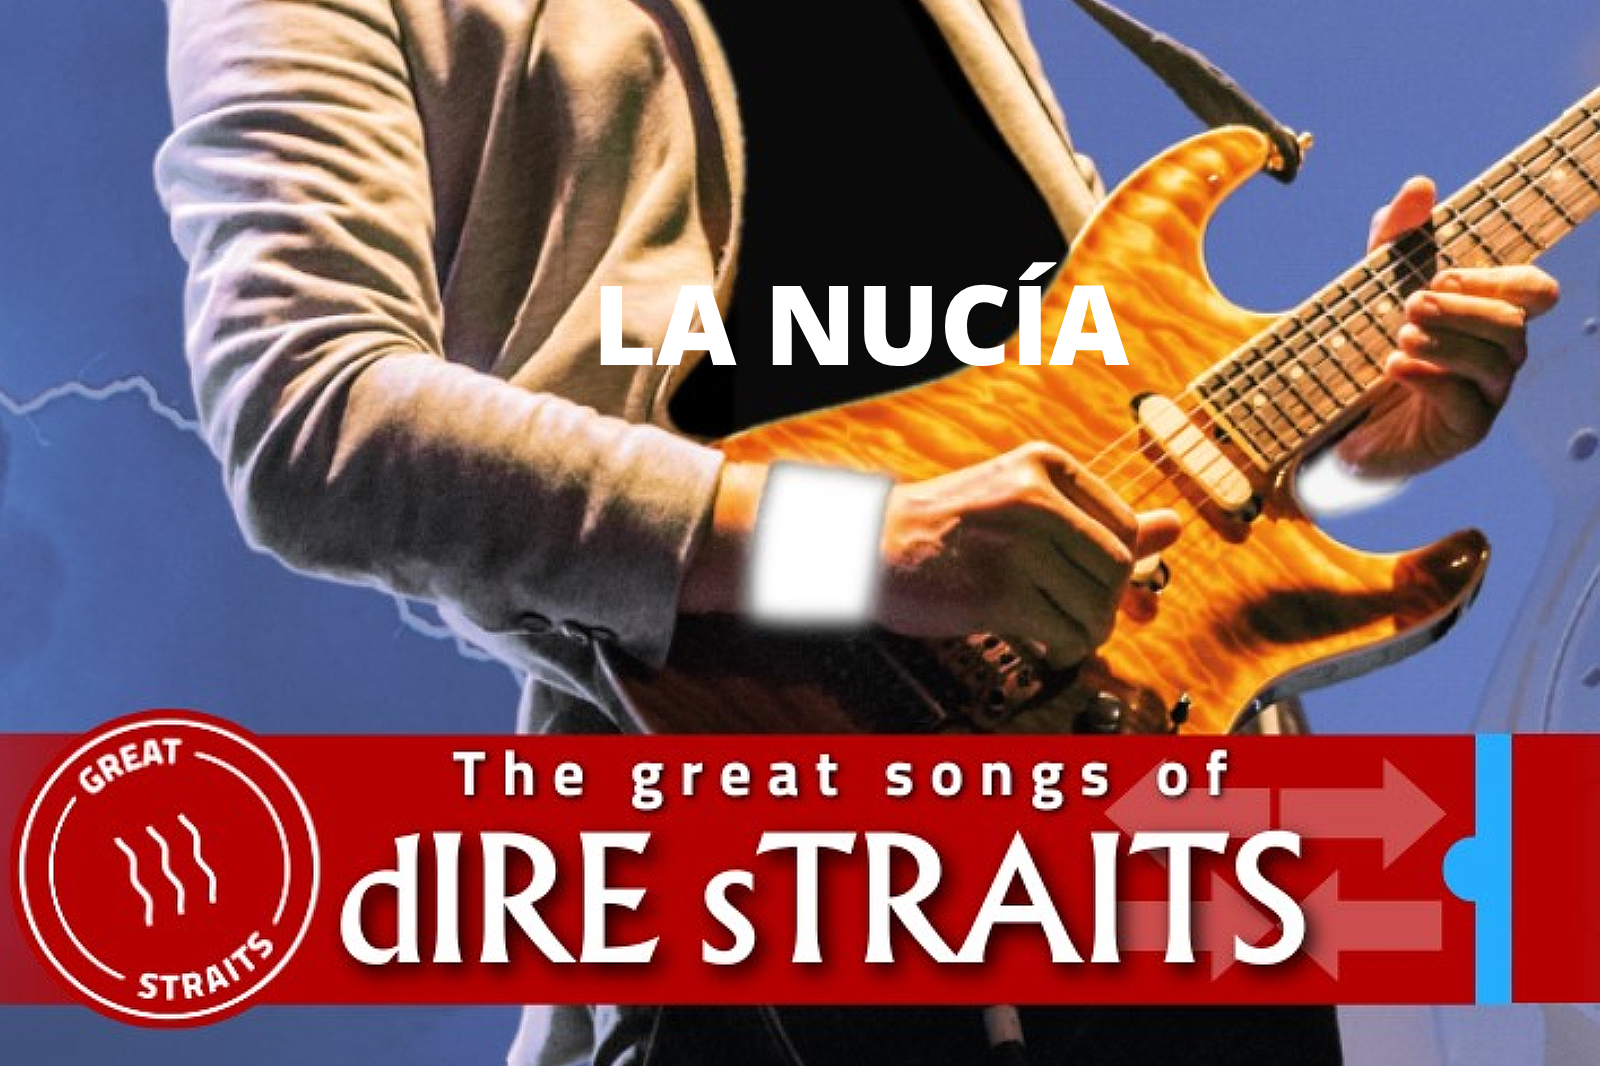 dIRE sTRAITS La Nucía. The Great Songs